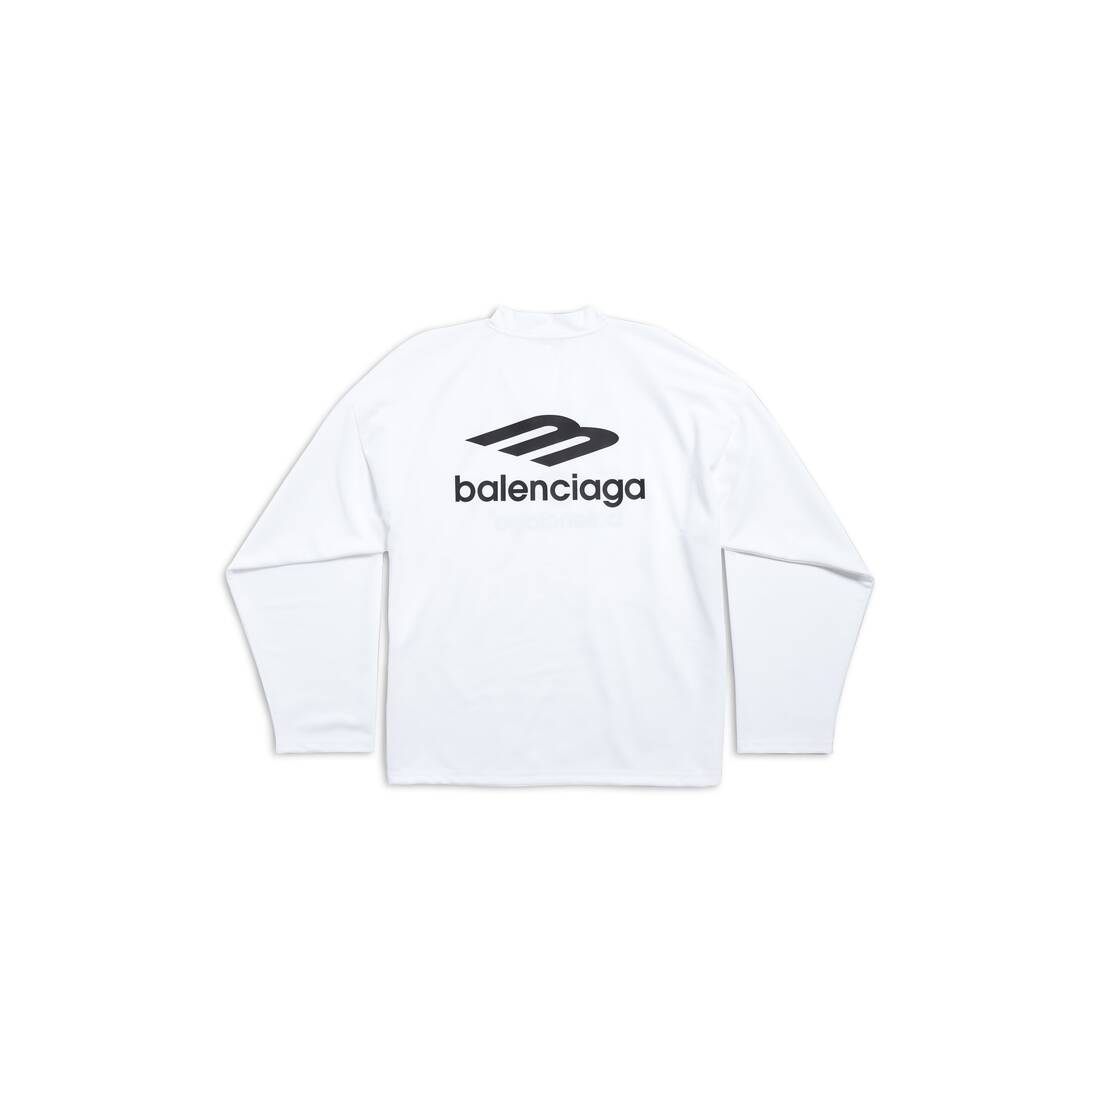 Skiwear - 3b Sports Fit Balenciaga | in Large Icon Ski T-shirt Sleeve White Long US